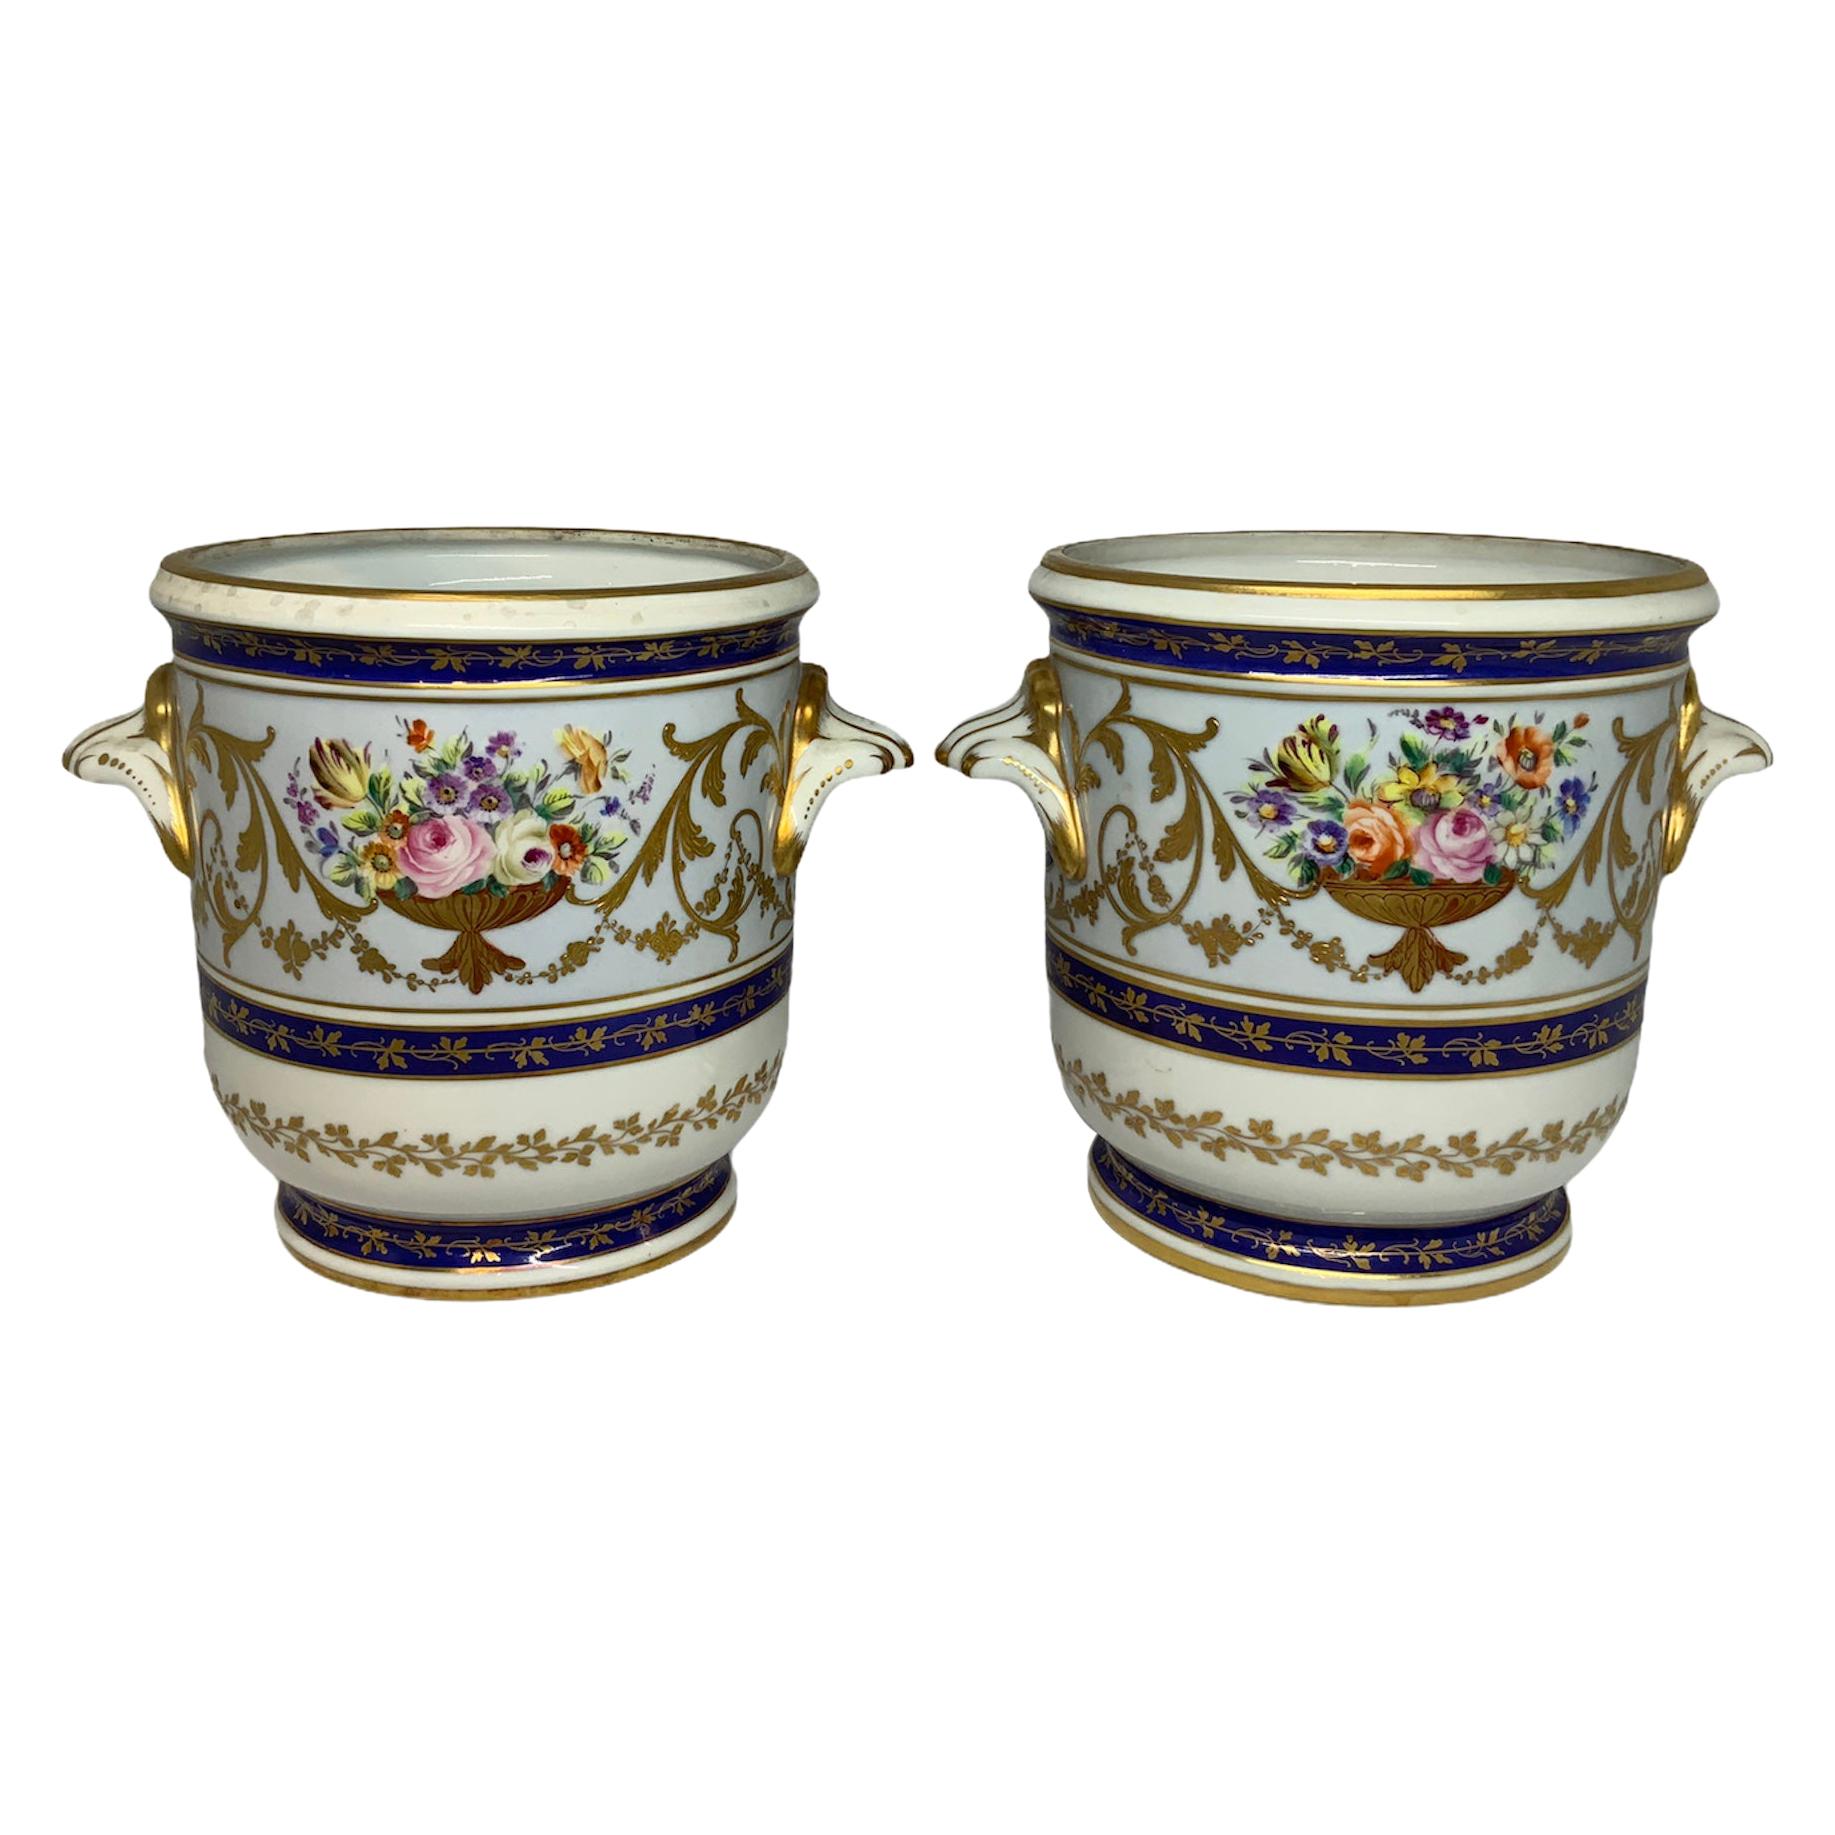 Camille Le Tallec Porcelain Pair of Cachepot For Sale